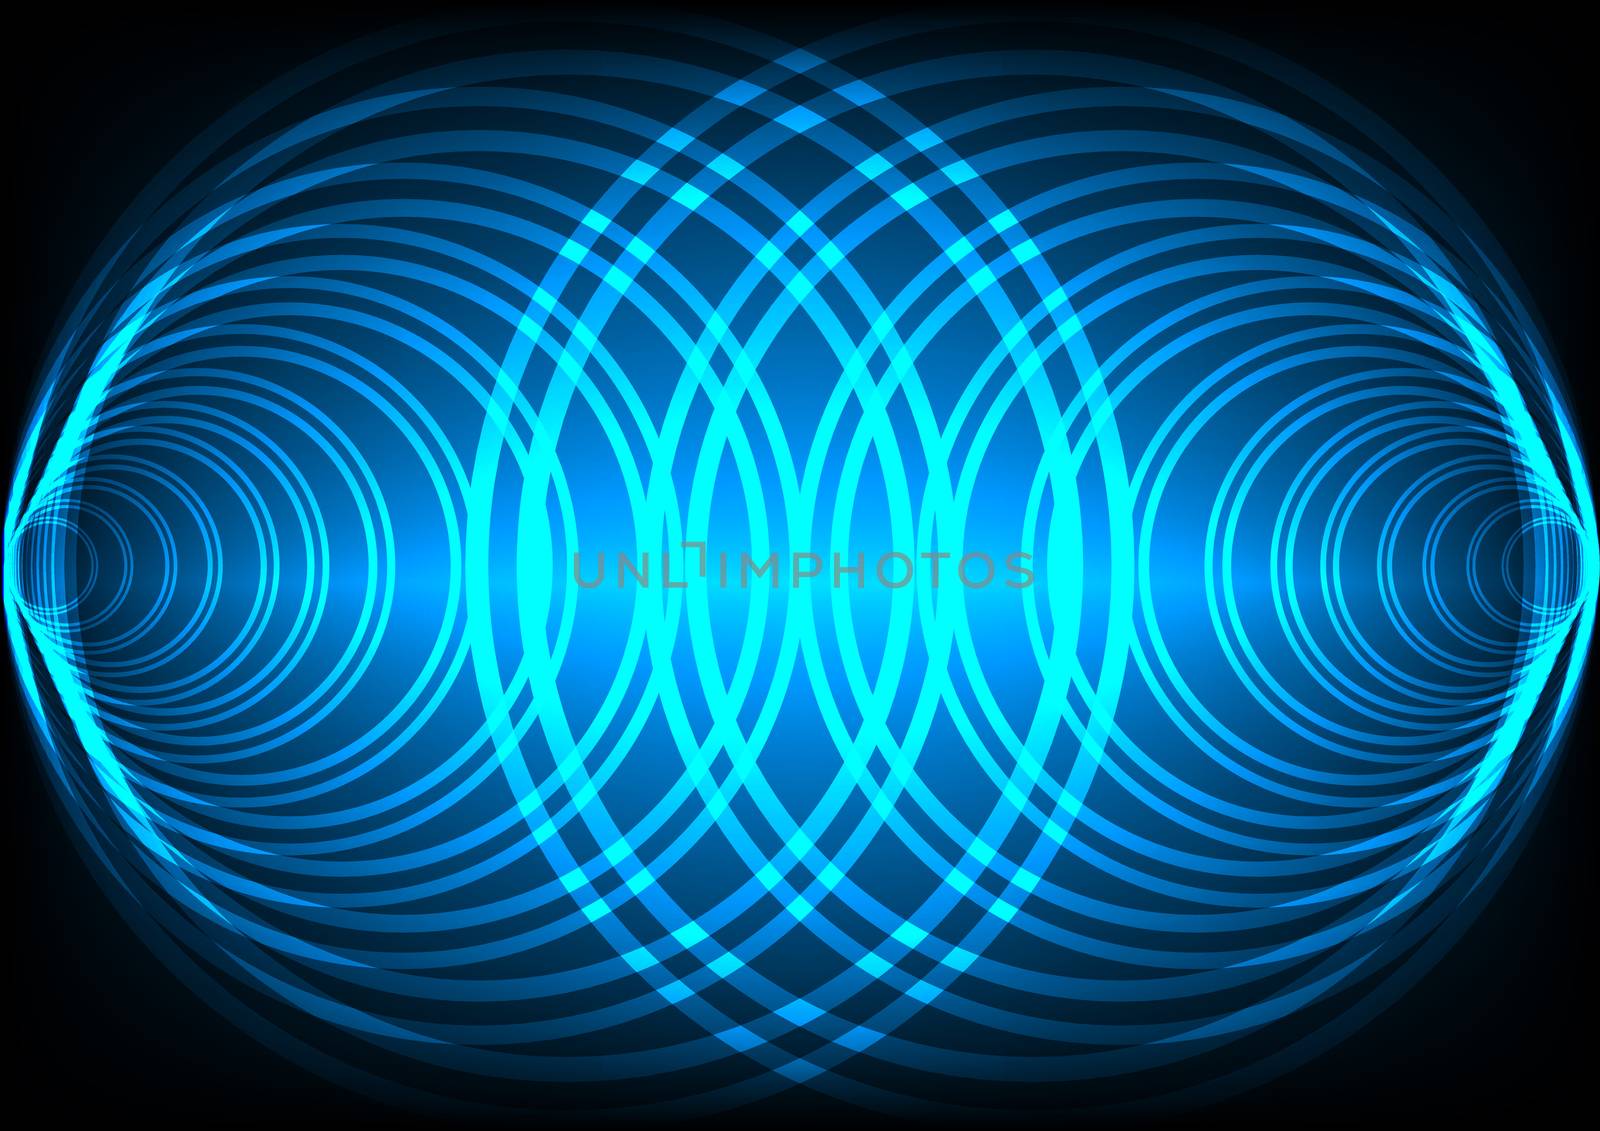 multi circle wave surround on dark blue color background